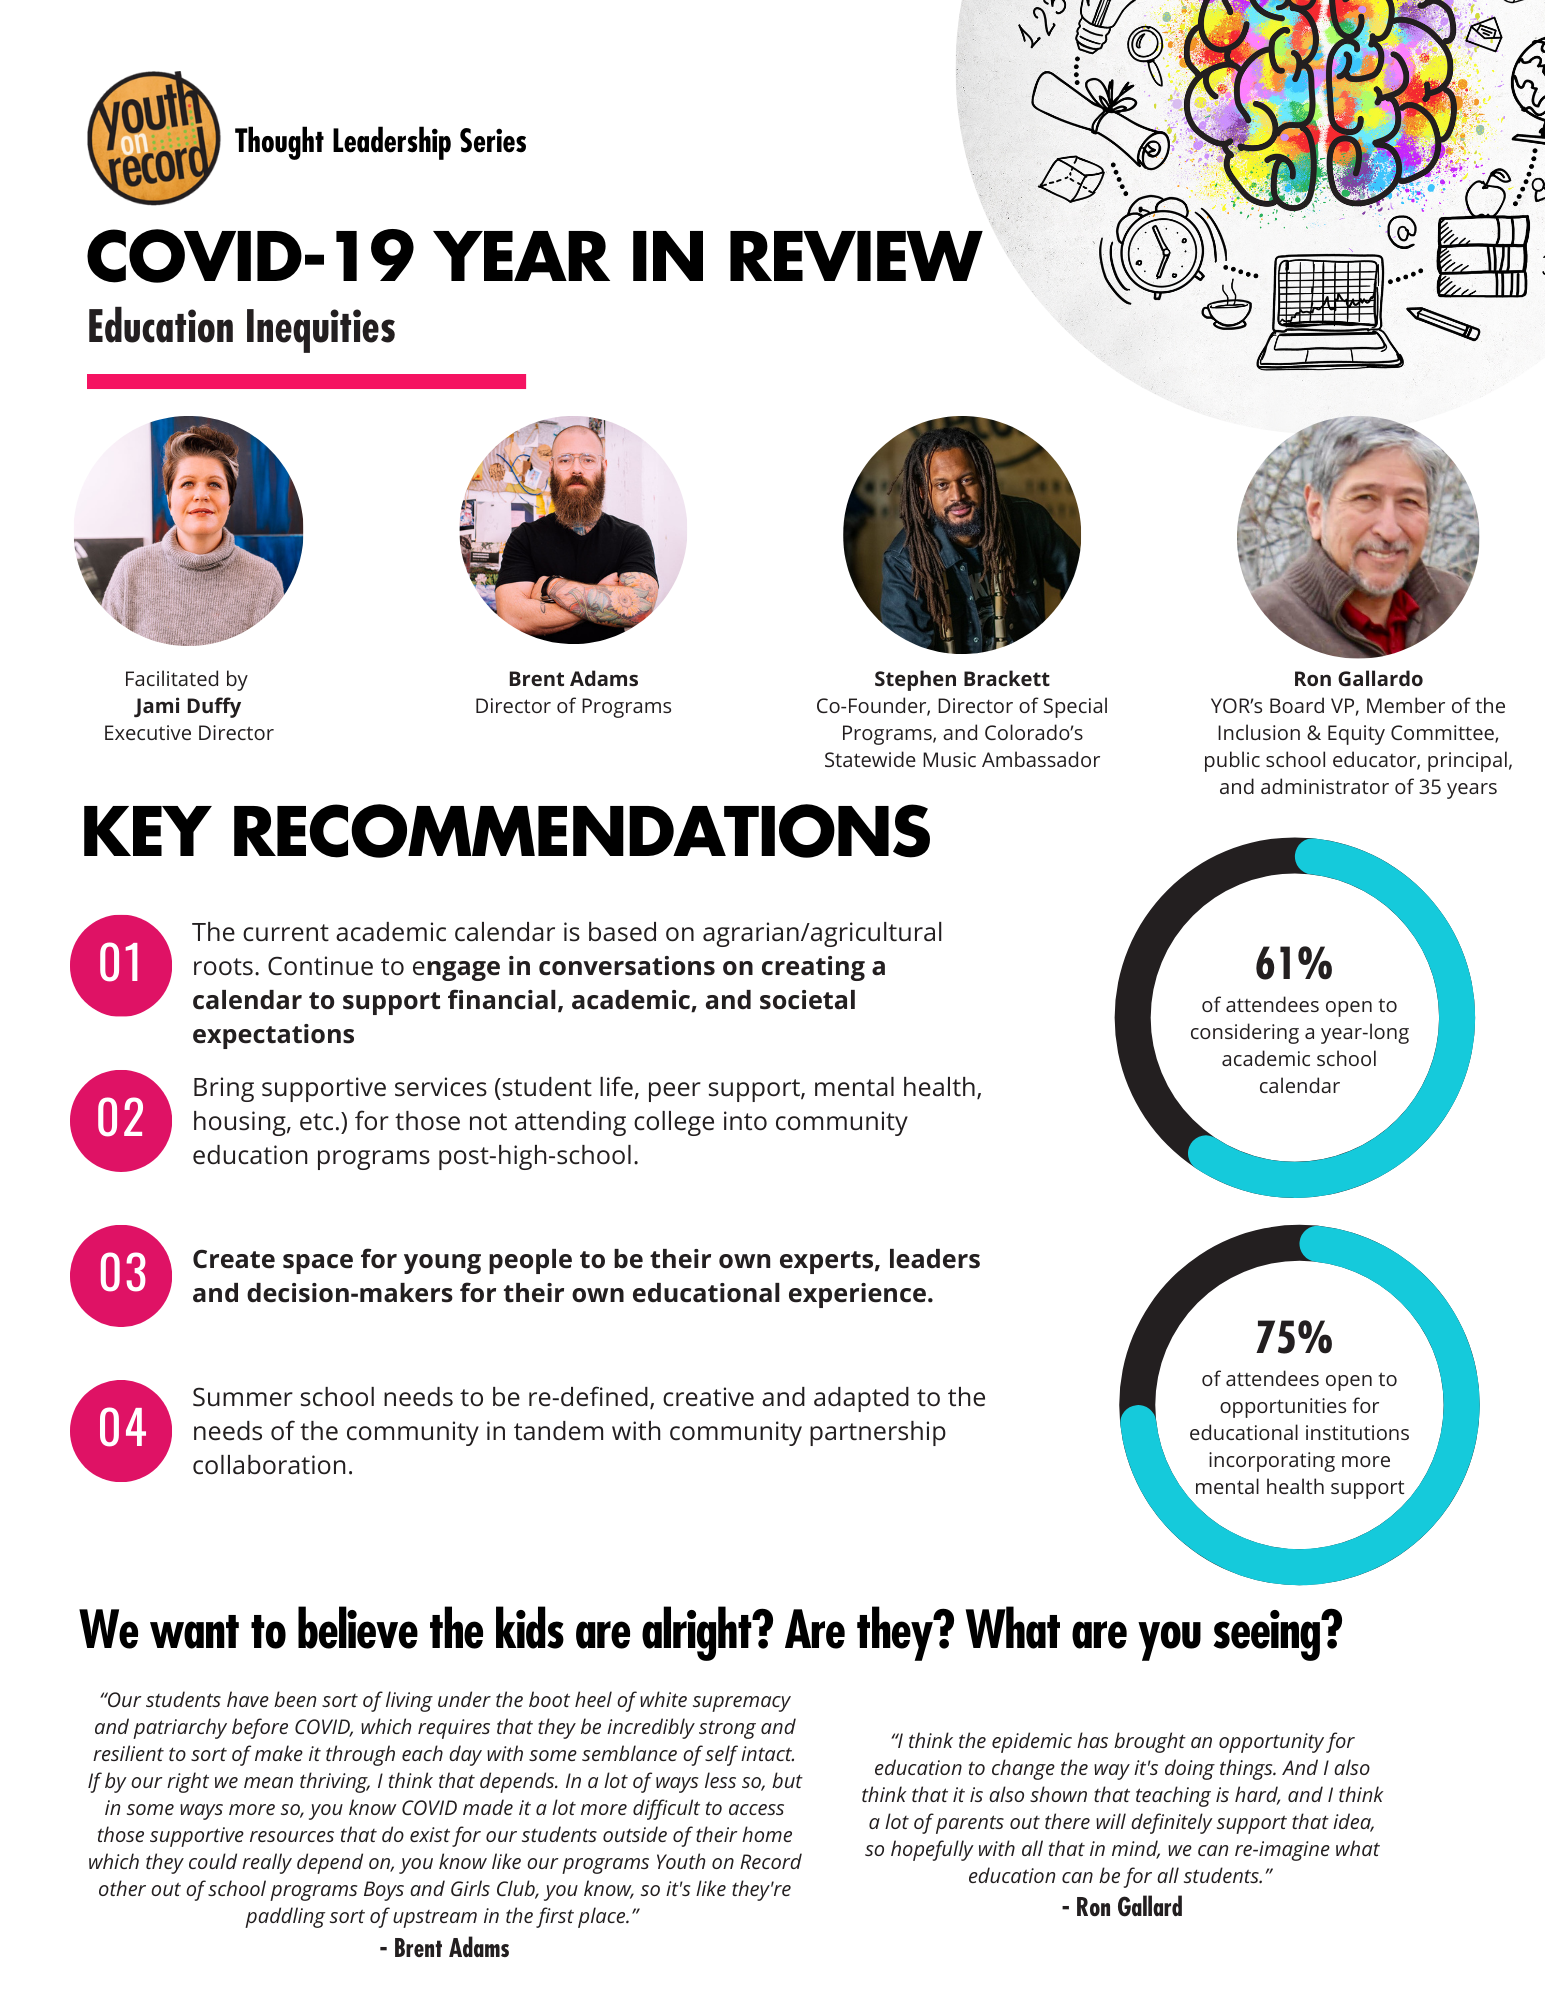 COVID-19 Year in Review - Key Takeaways